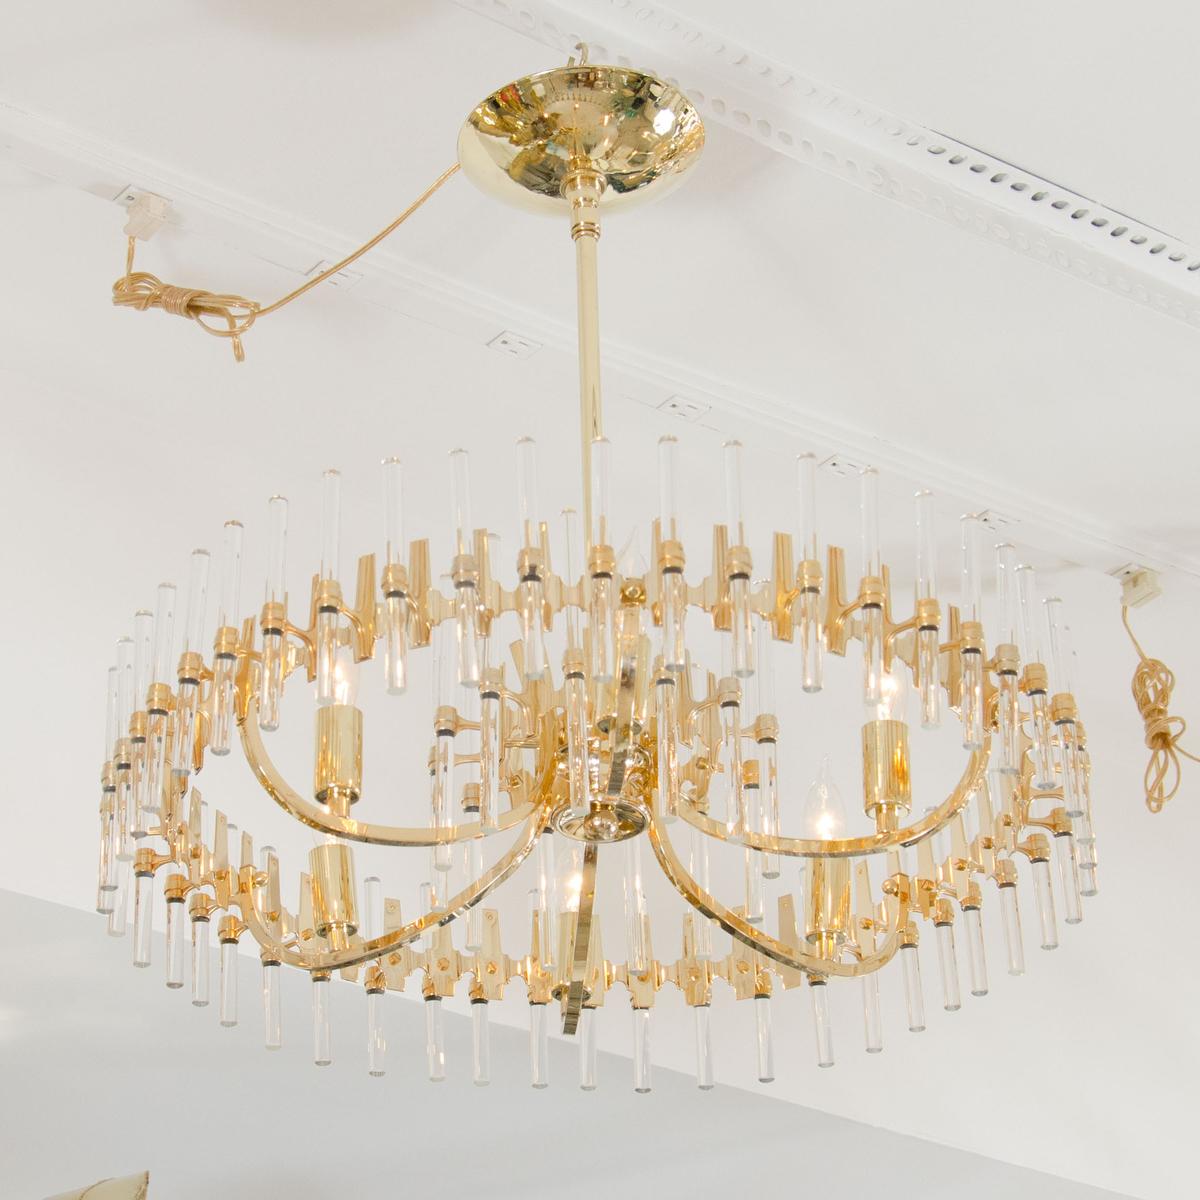 Circular brass six-arm chandelier with tubular glass decoration.